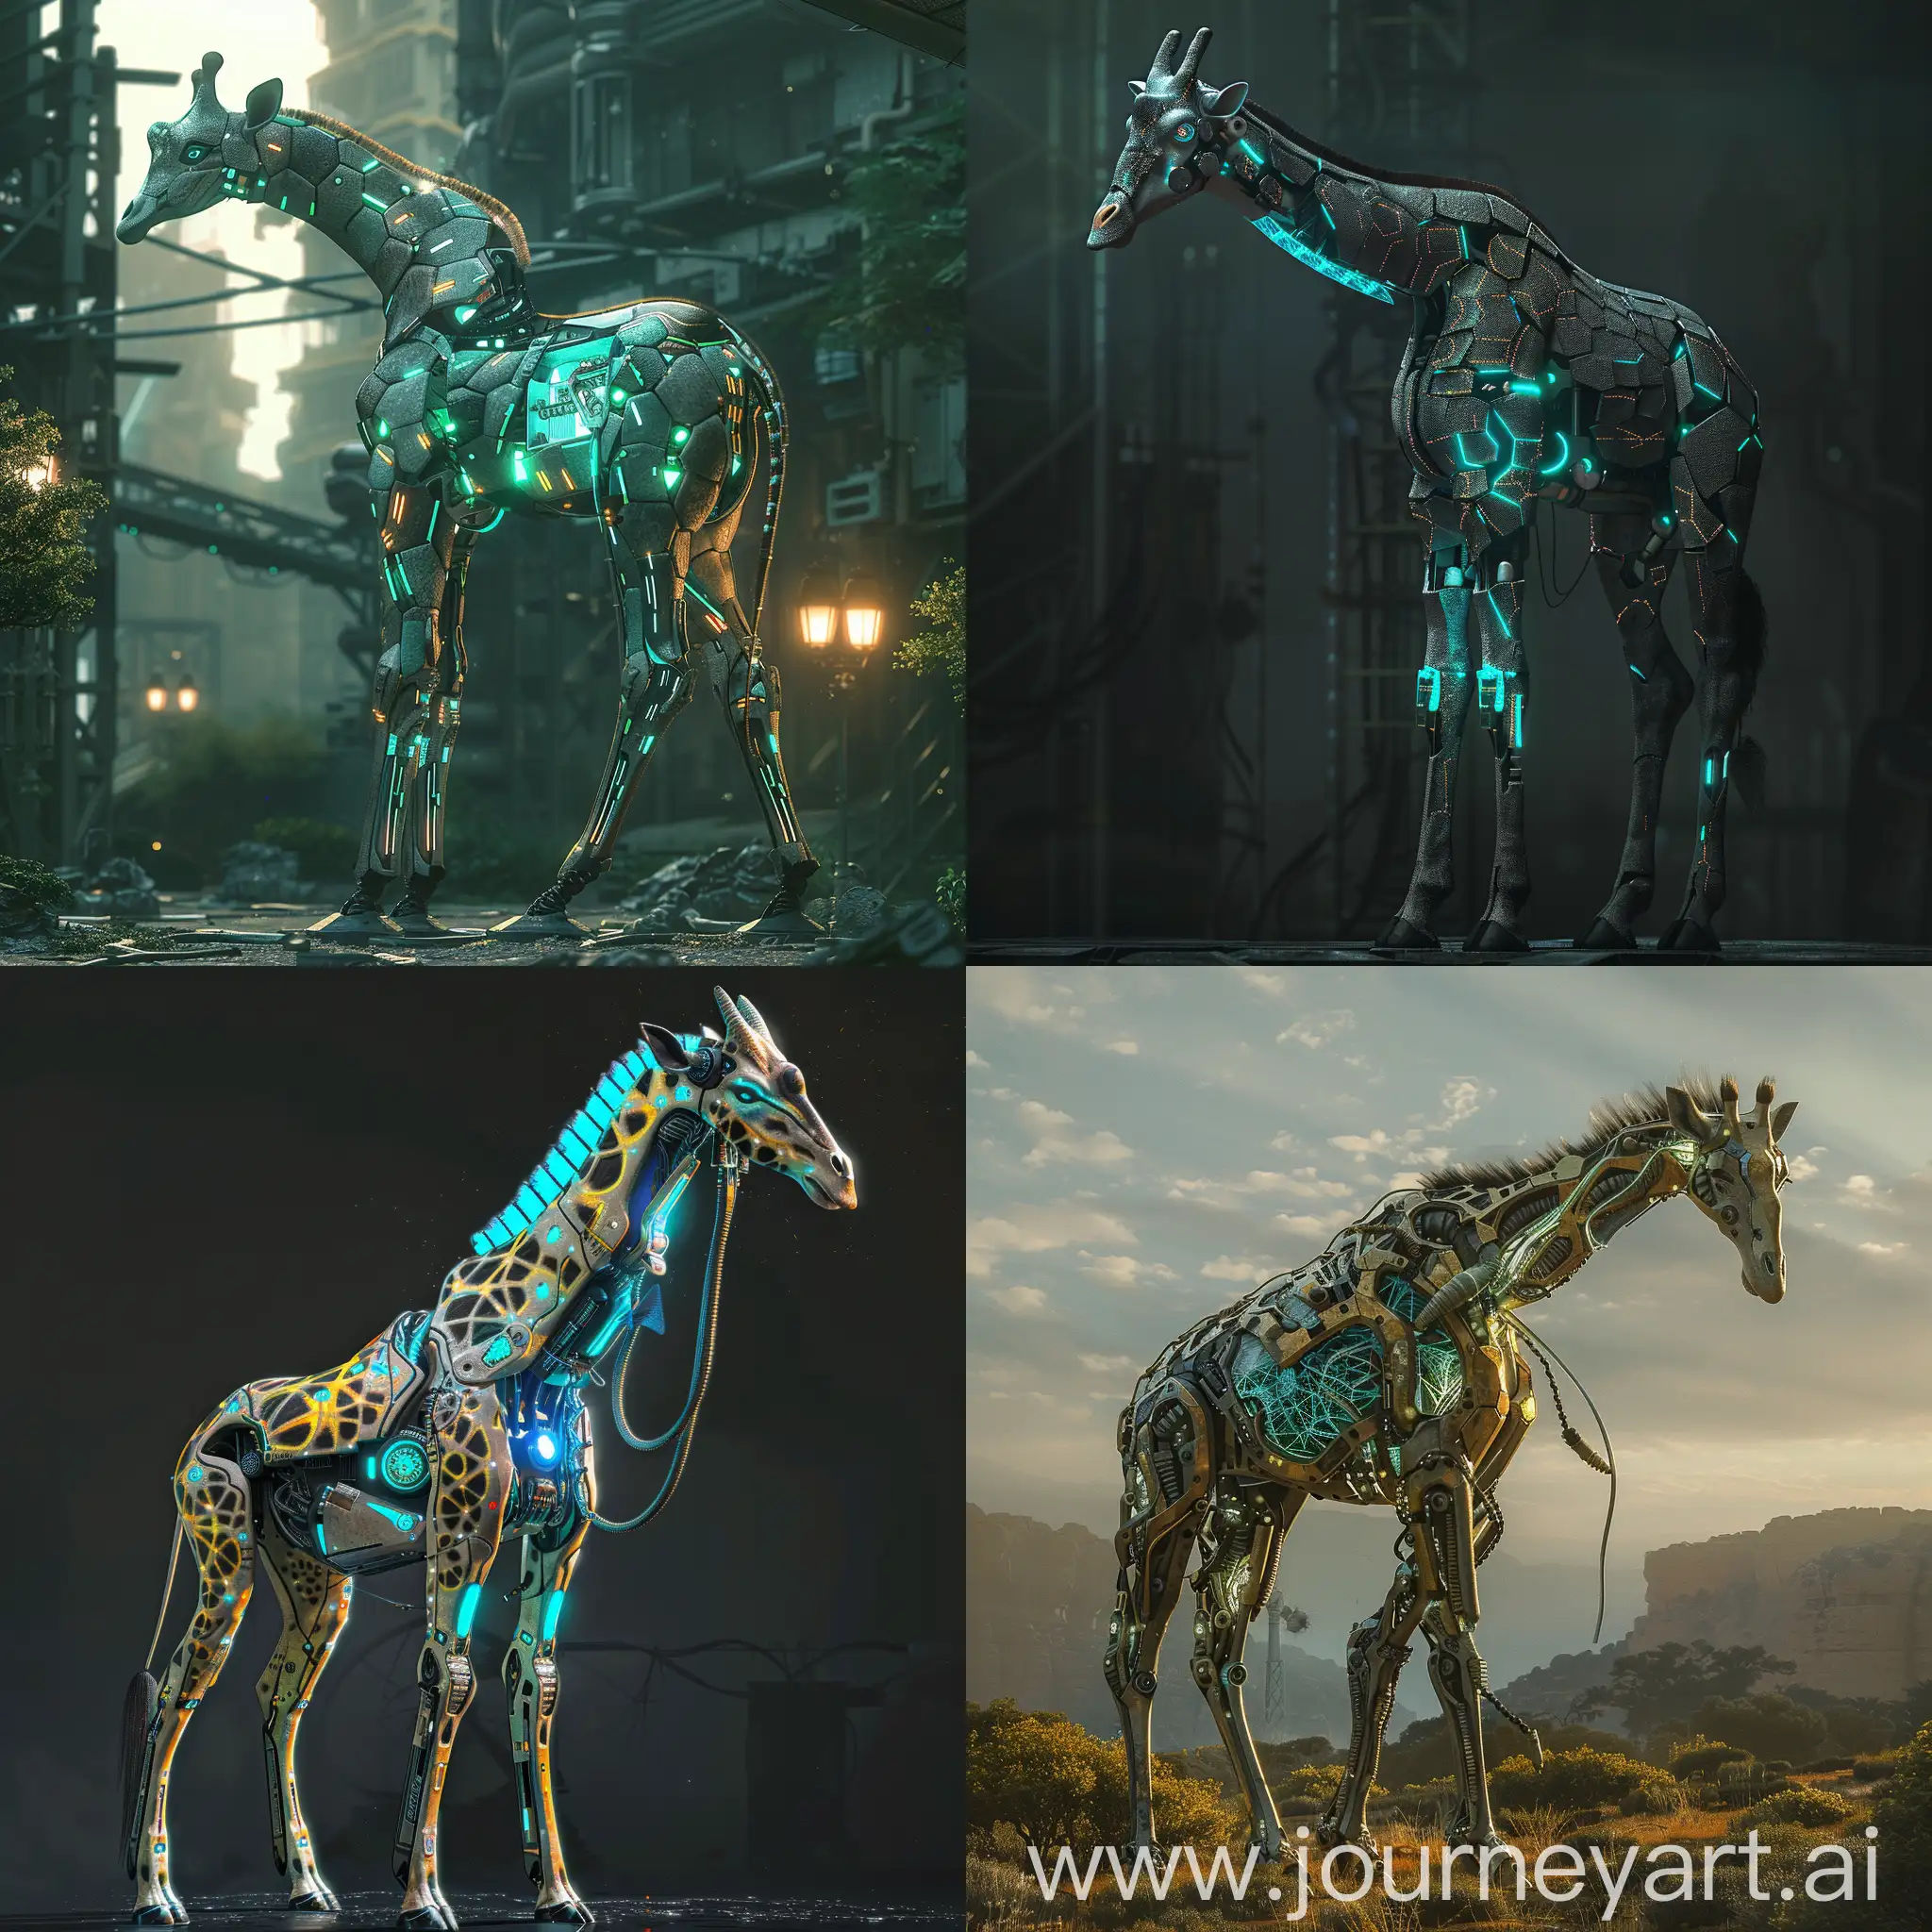 Futuristic-Giraffe-with-HeliumFilled-Osseous-Network-and-Bioluminescent-Mane